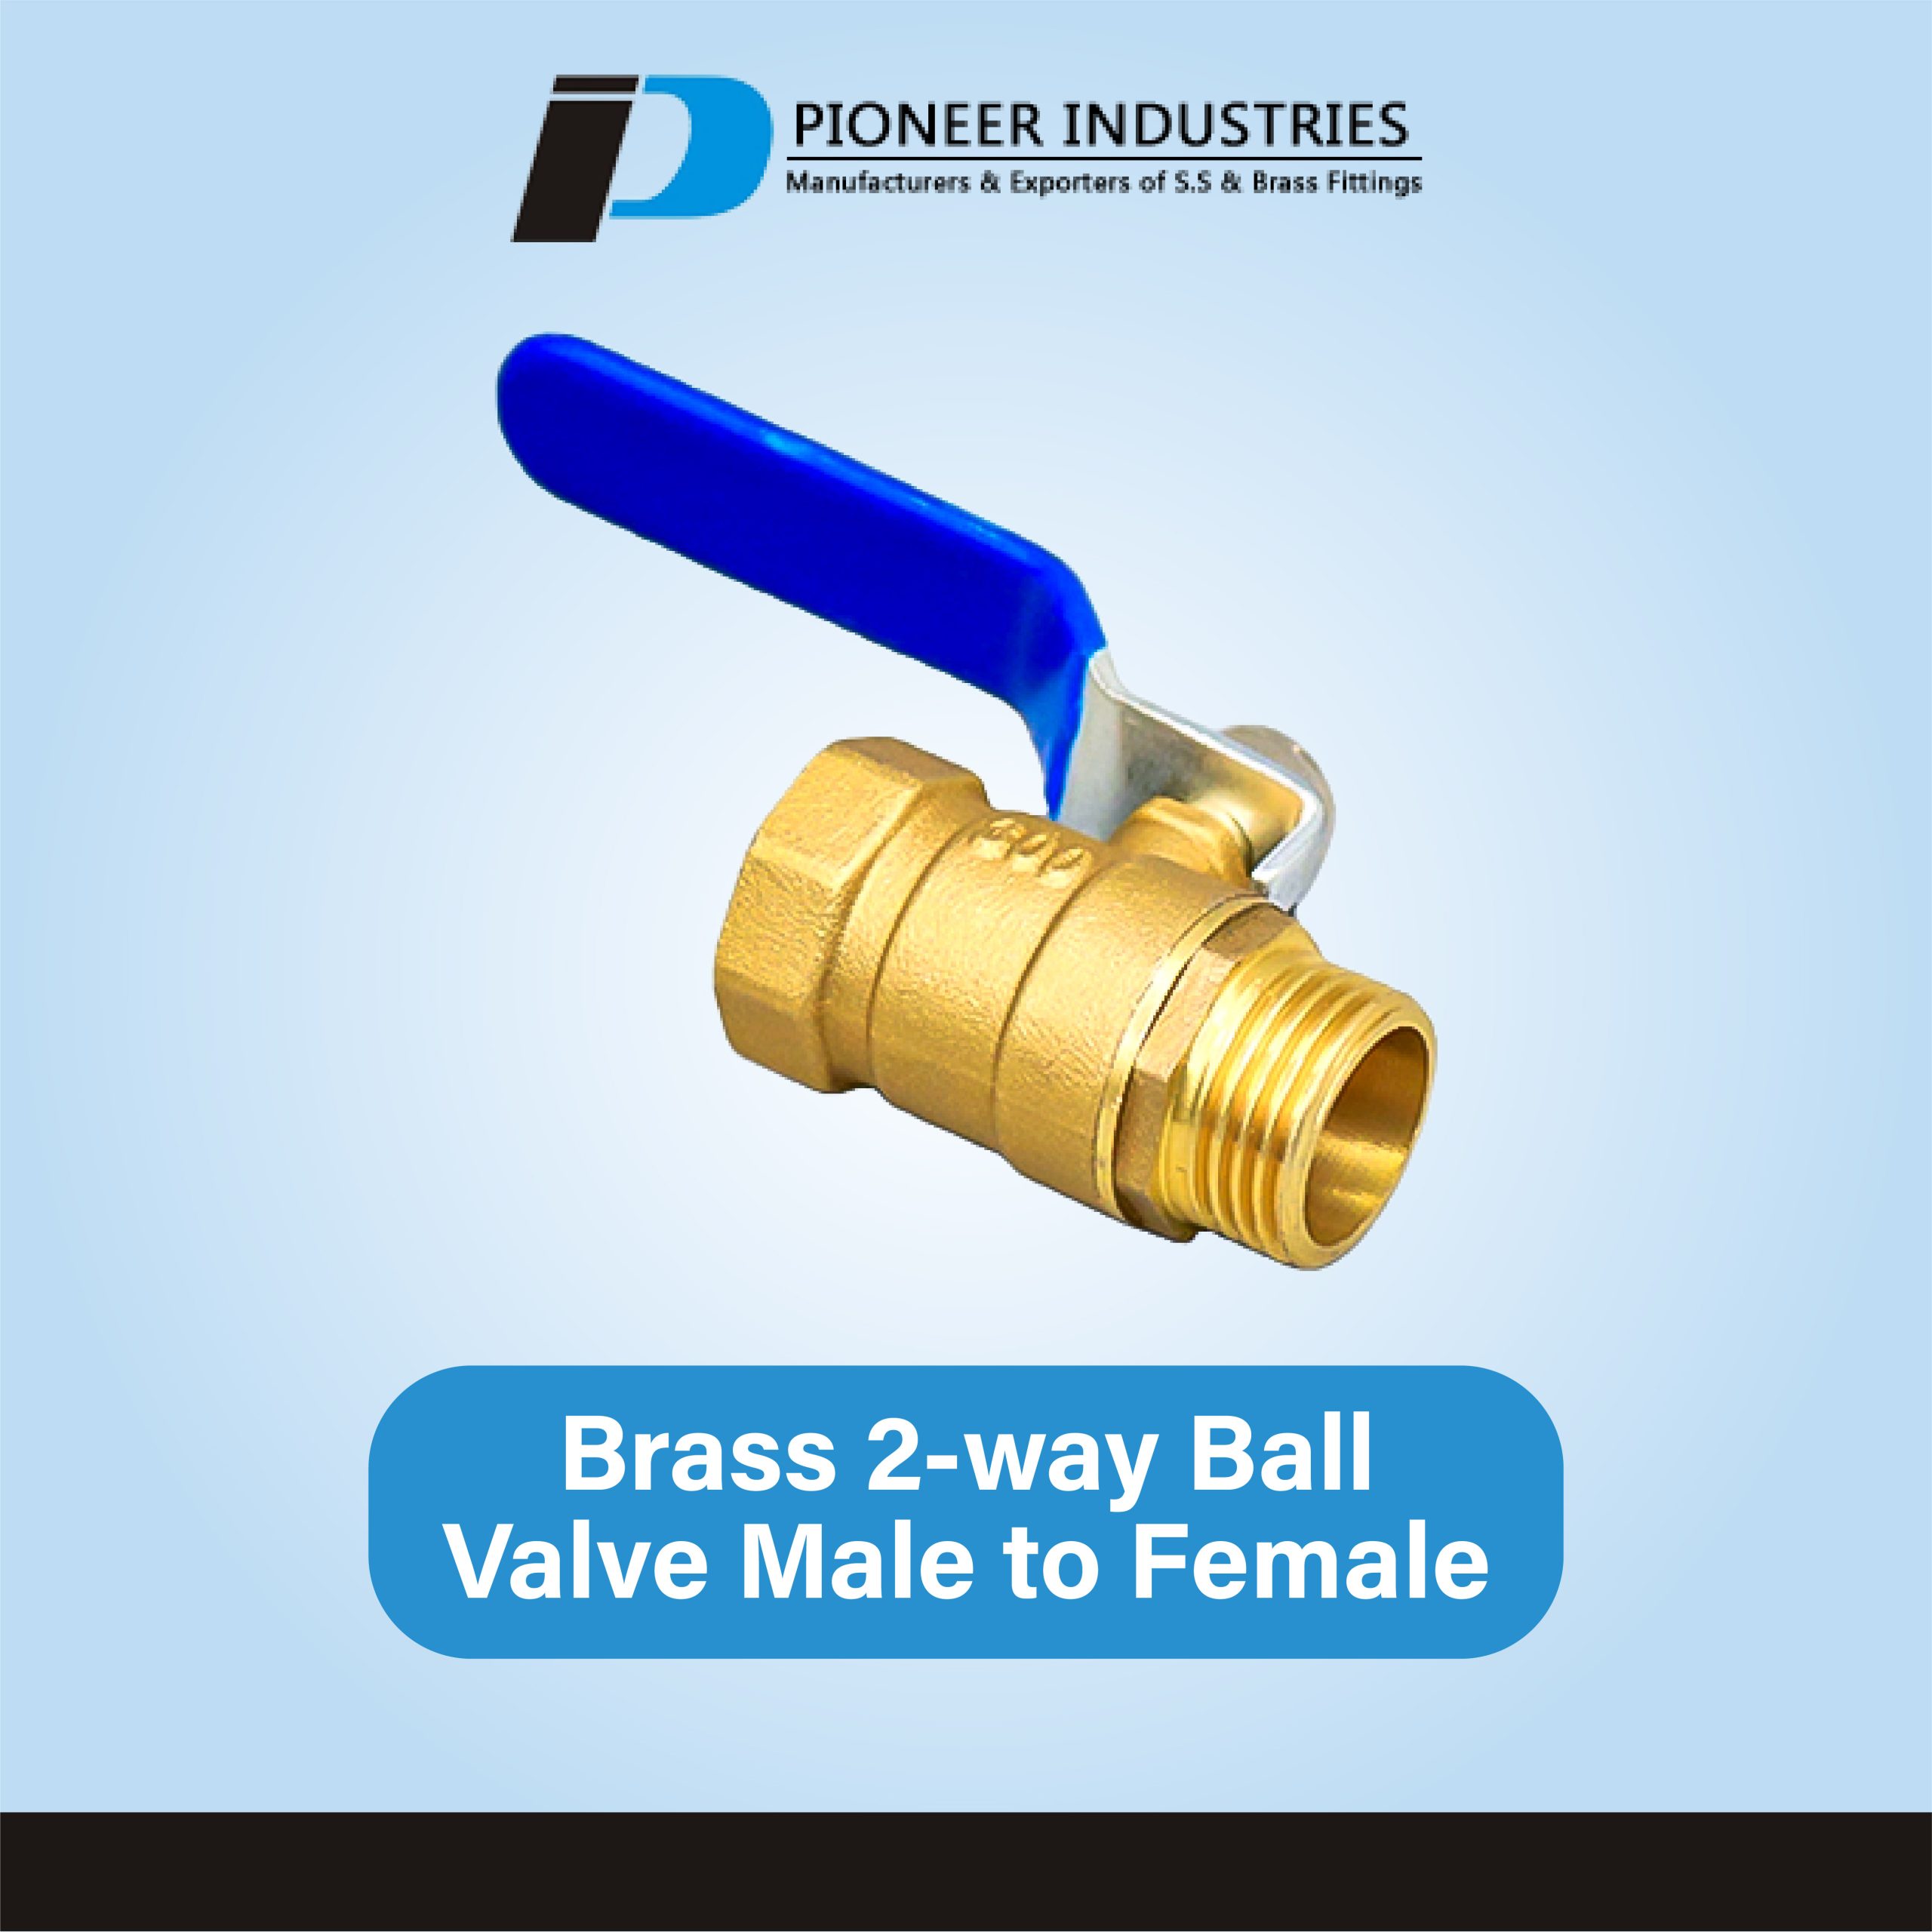 Brass 2-way Ball Valve Male to Female